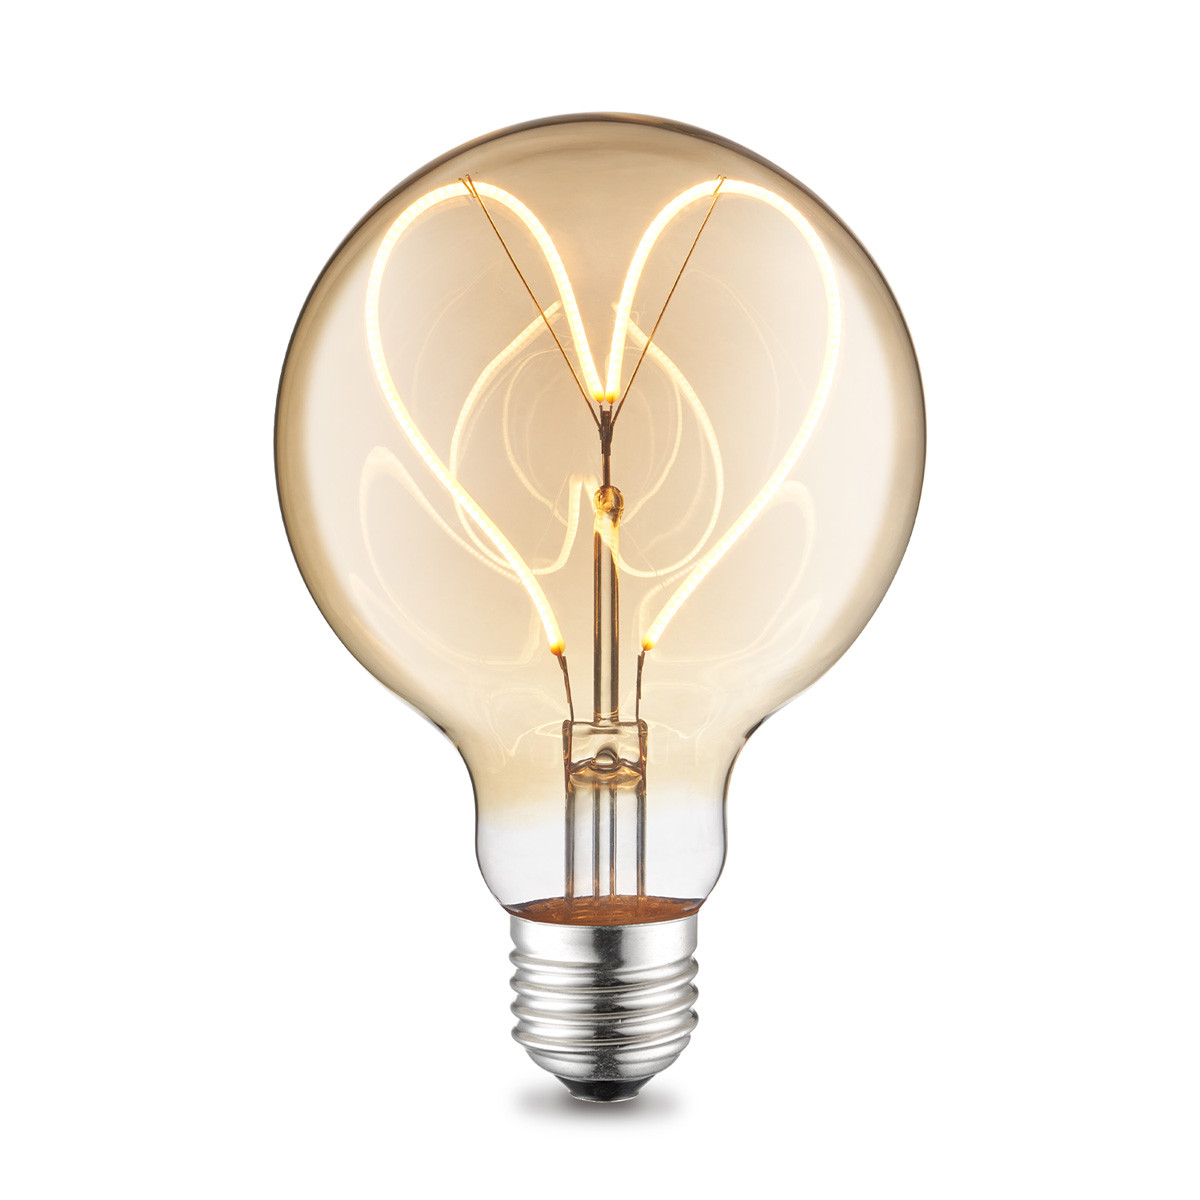 Edison Vintage LED lamp E27 LED filament lichtbron, Heart Globe G95, 9.5/9.5/13.5cm, Amber, Retro LED lamp Dimbaar, 4W 280lm 2700K, warm wit licht, geschikt voor E27 fitting